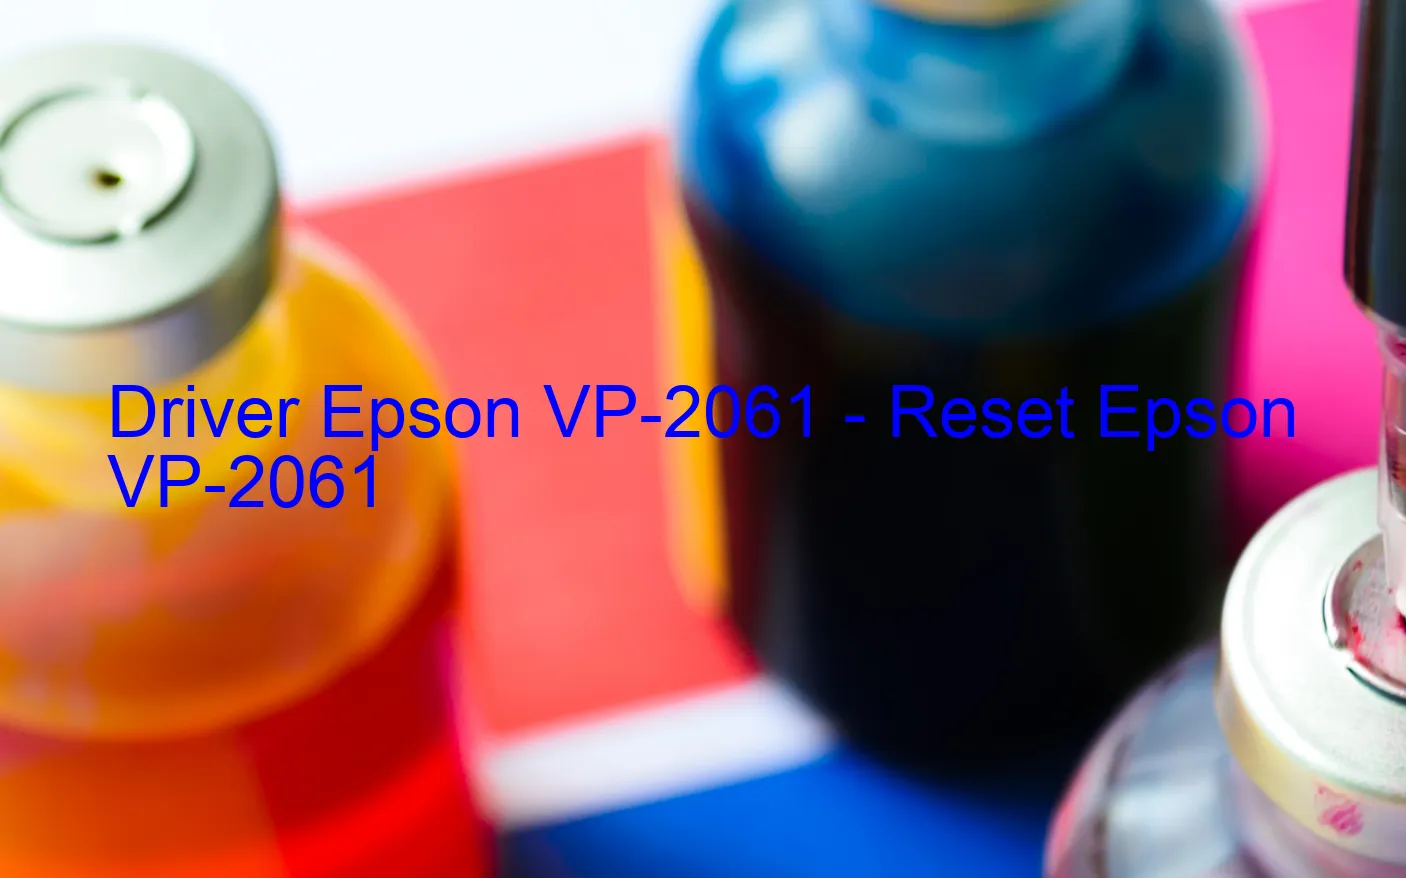 Epson VP-2061のドライバー、Epson VP-2061のリセットソフトウェア